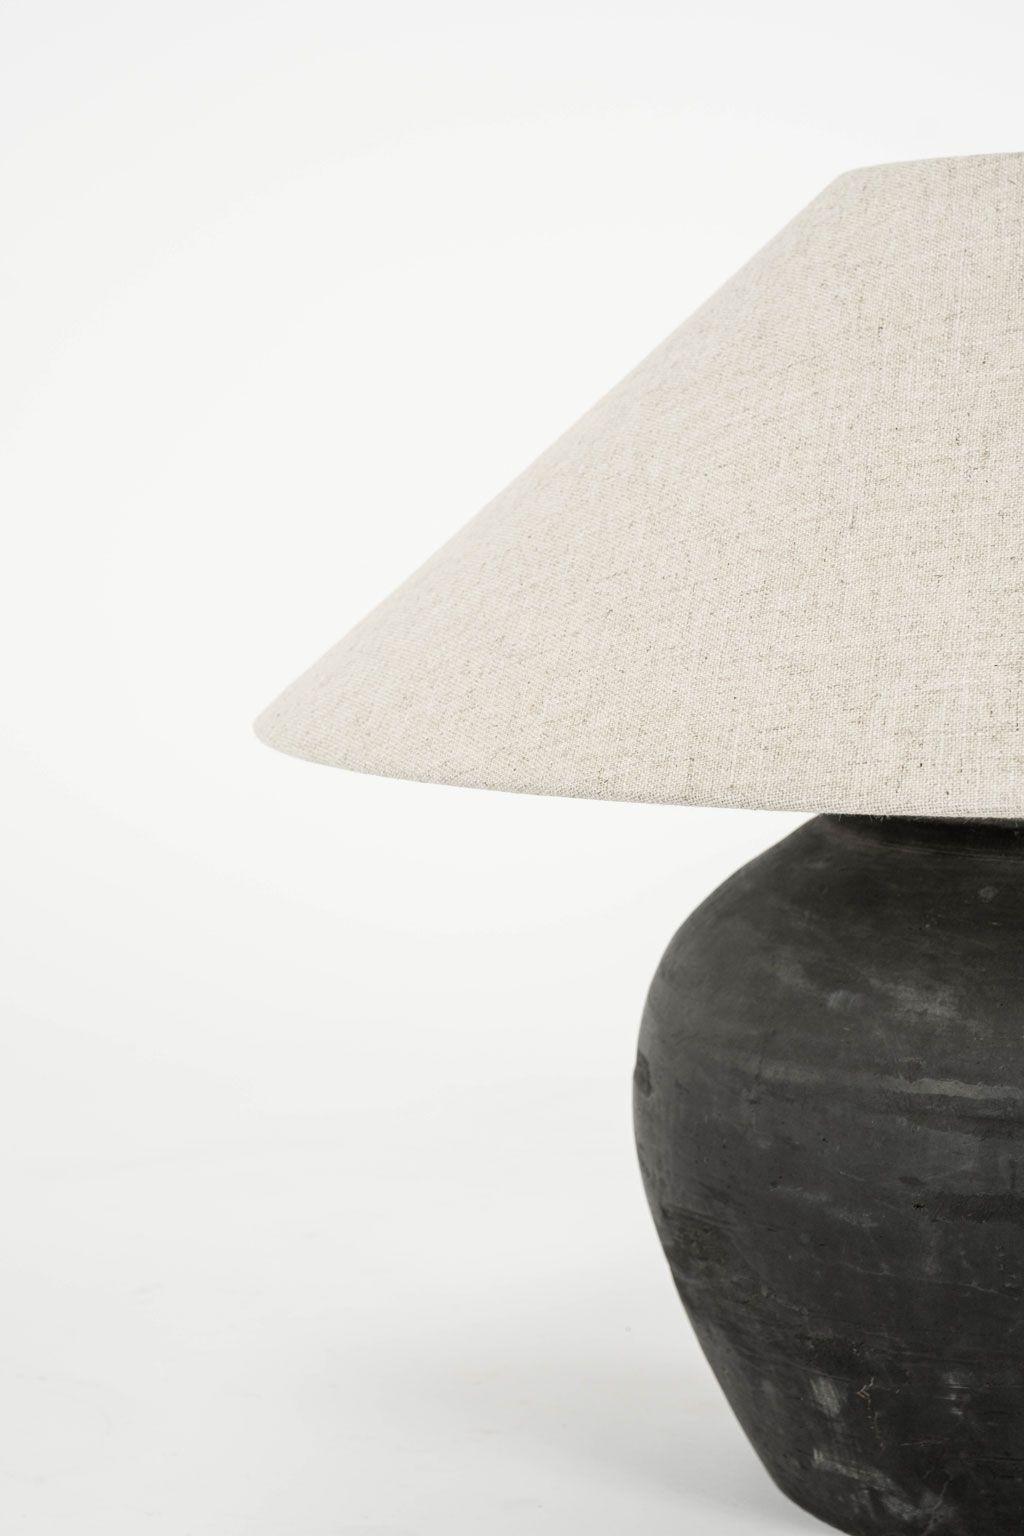 Belgian Matte Black Unglazed Lamp with Natural Color Linen Coolie Shade